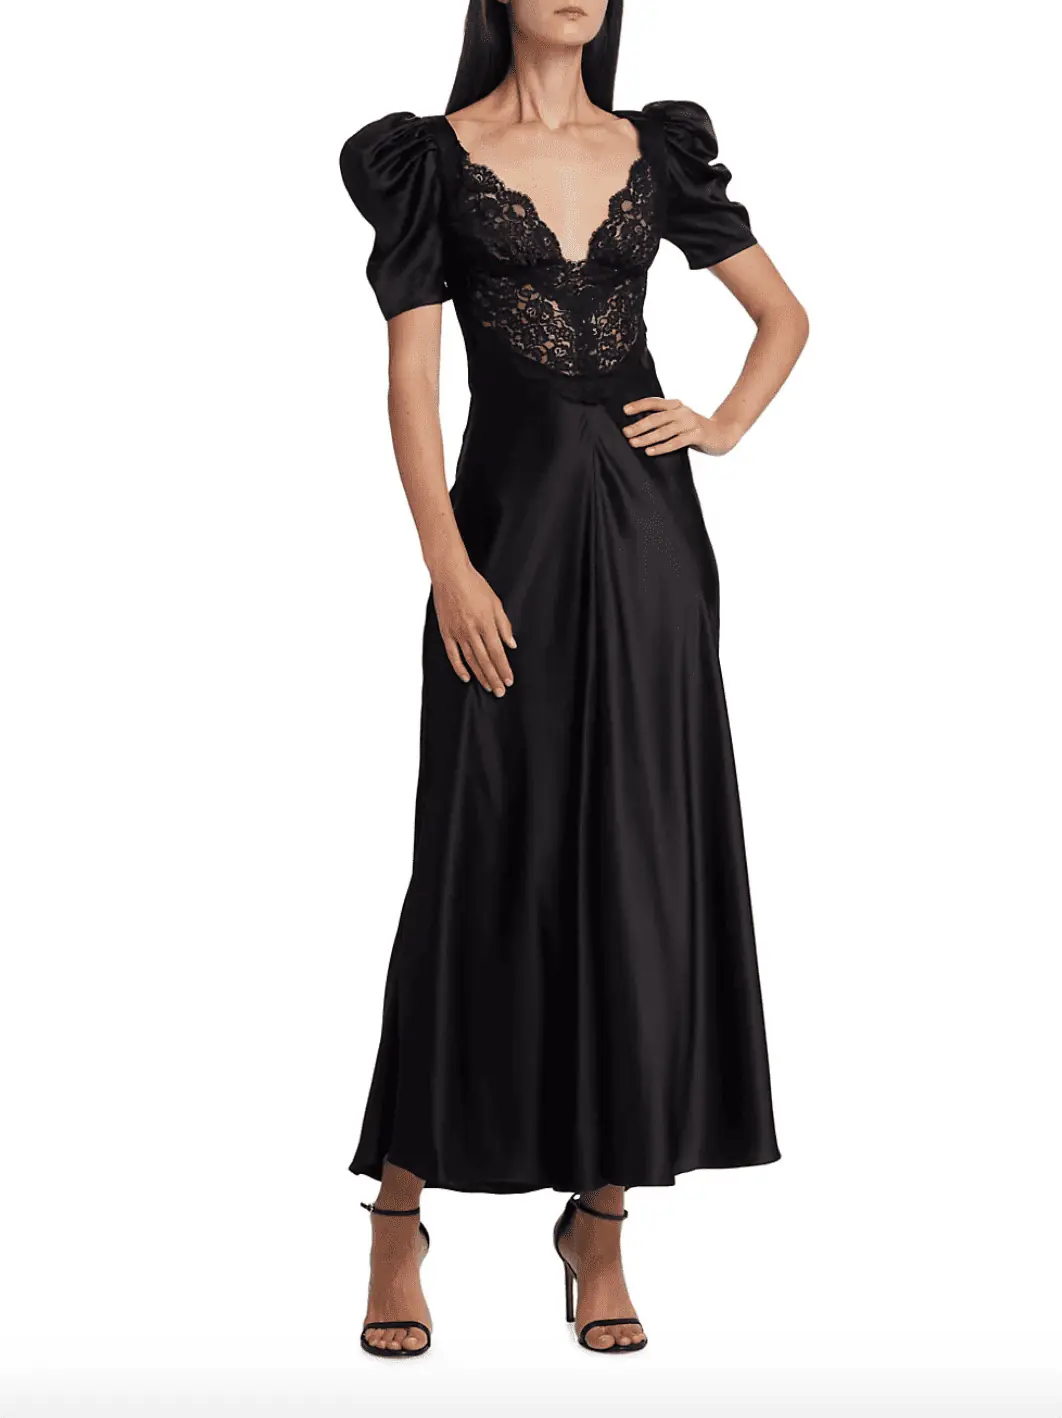 Brynn Whitfield's Black Satin Lace Puff Sleeve Dress